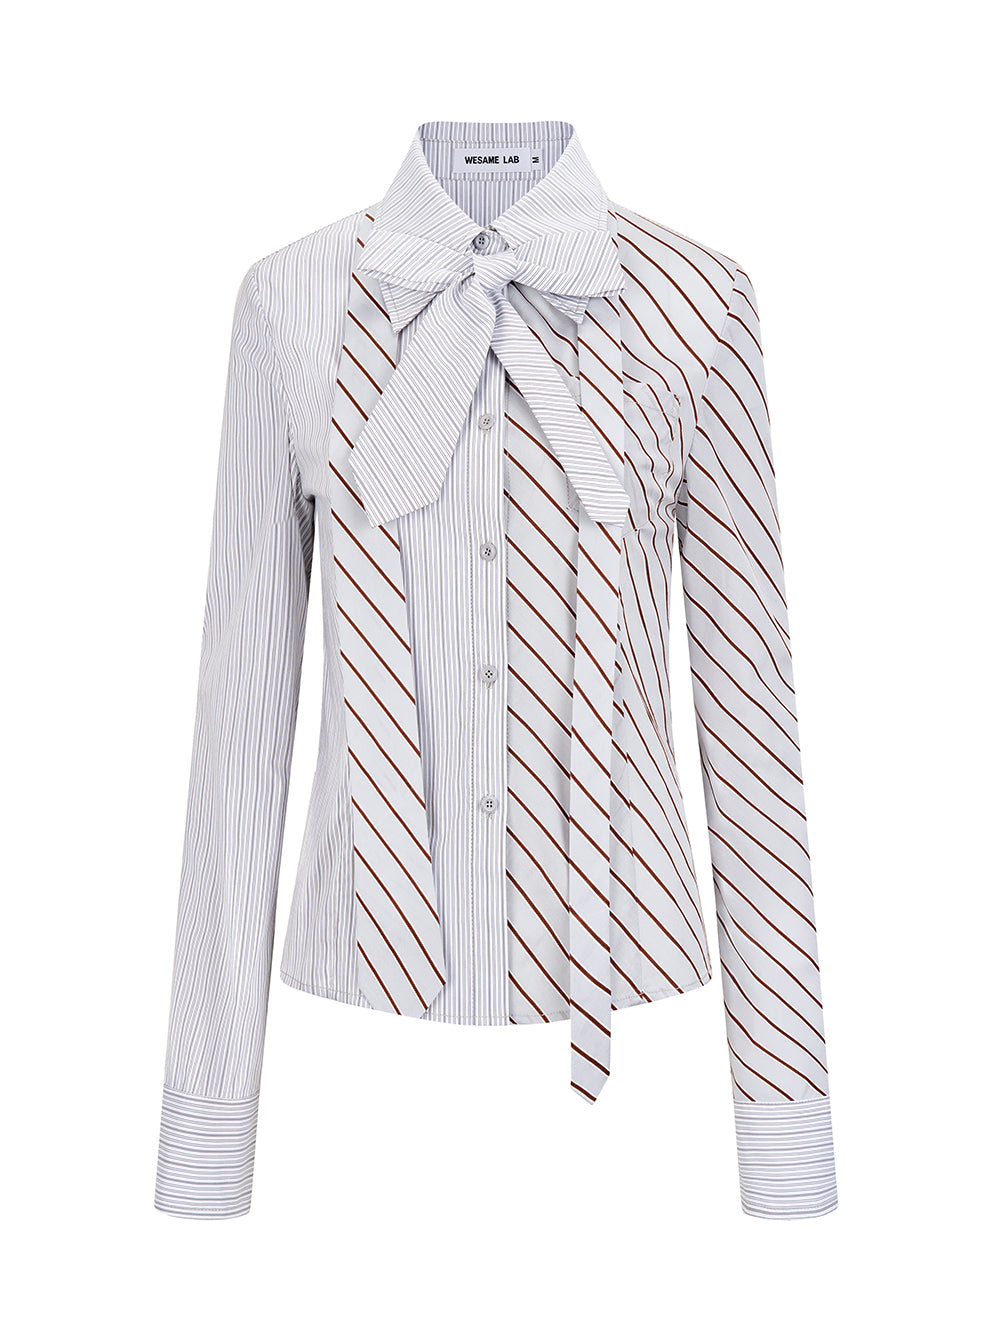 MUKTANK x WESAME Lightweight Slim Fit Striped Shirt with Waist Cinching Panels